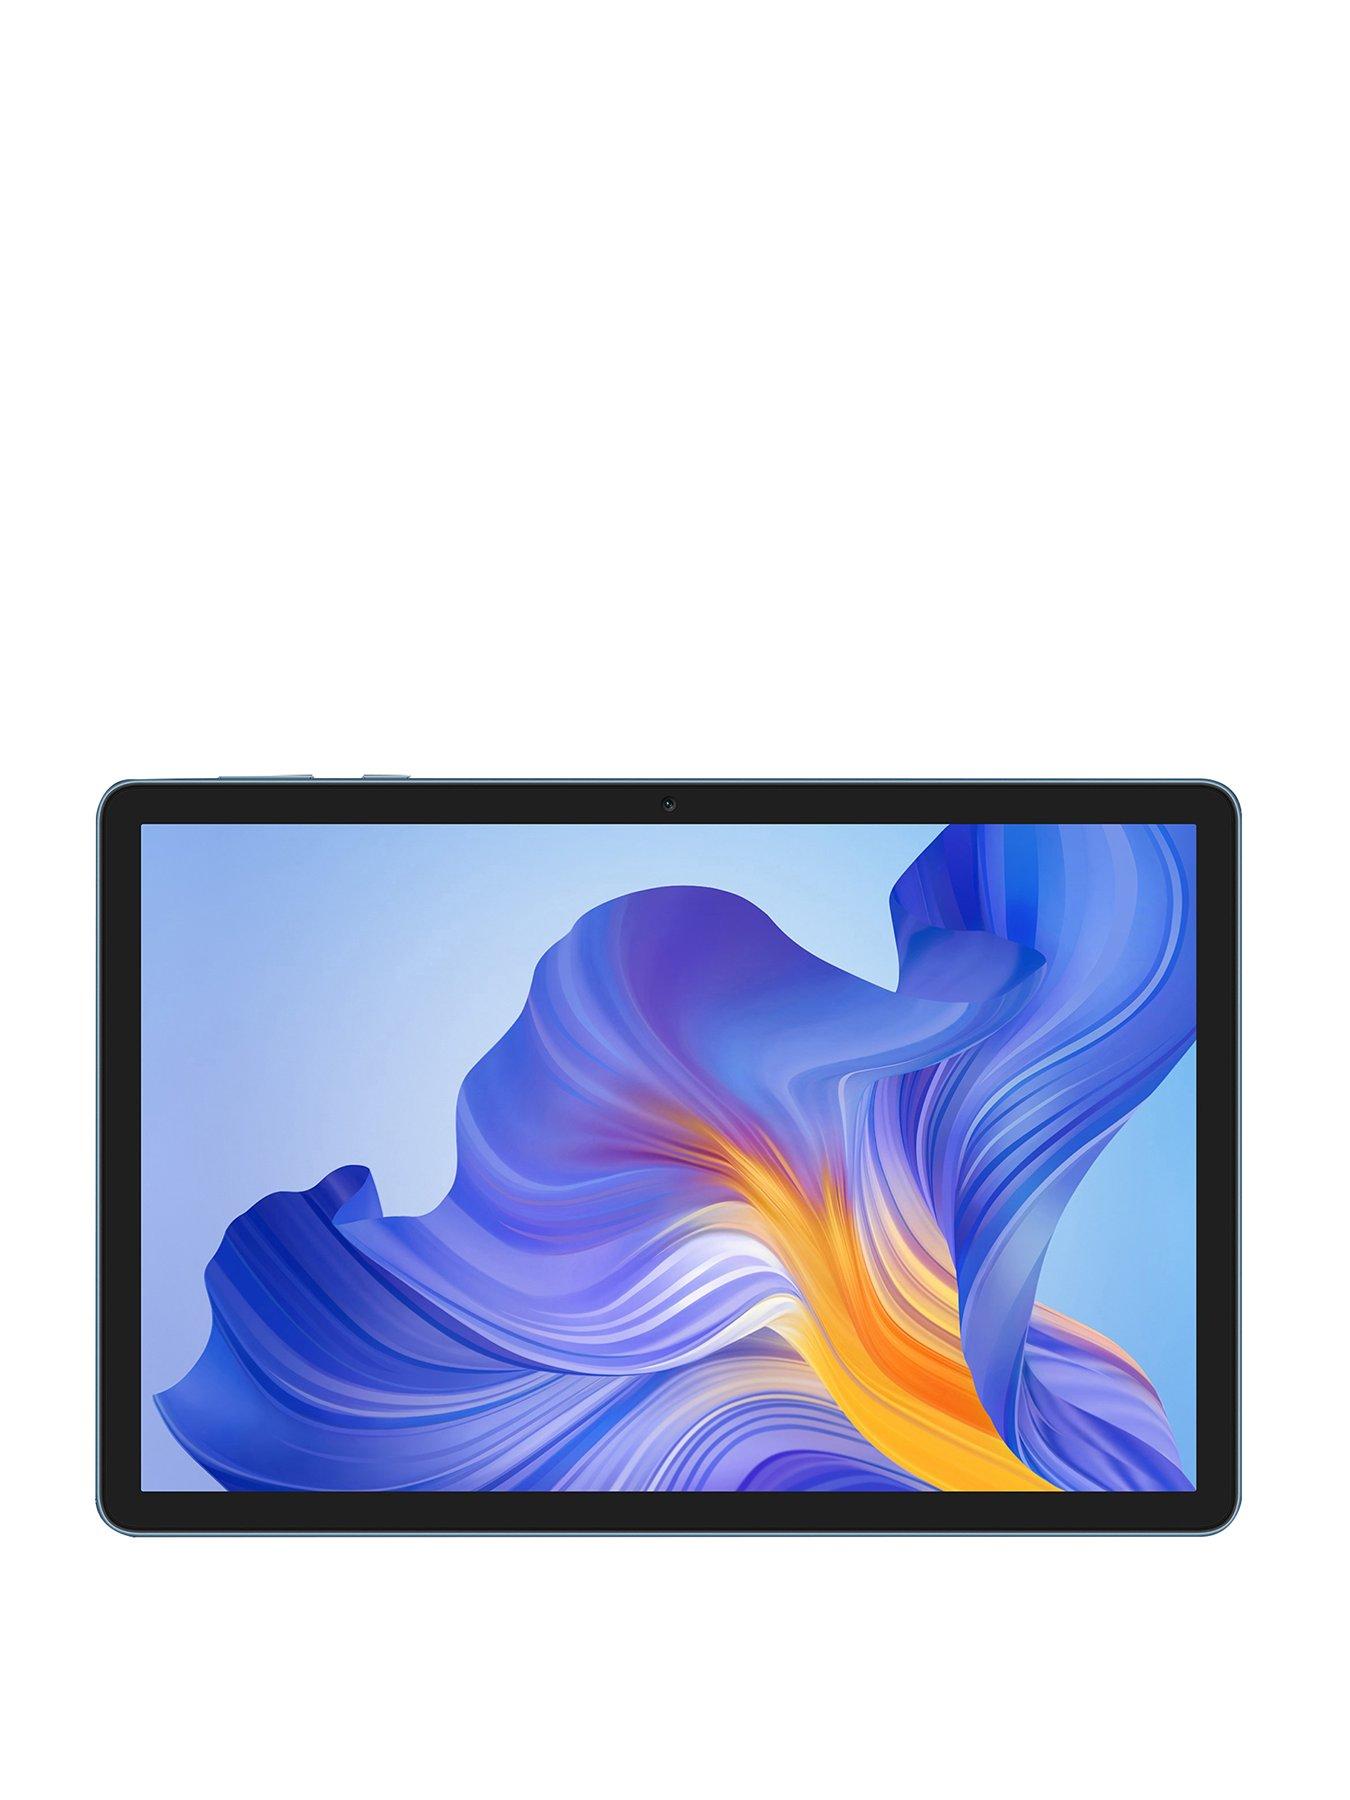 Honor Pad X8 10.1-inch Tablet, 4GB RAM, 64GB Storage, Wi-Fi - Blue